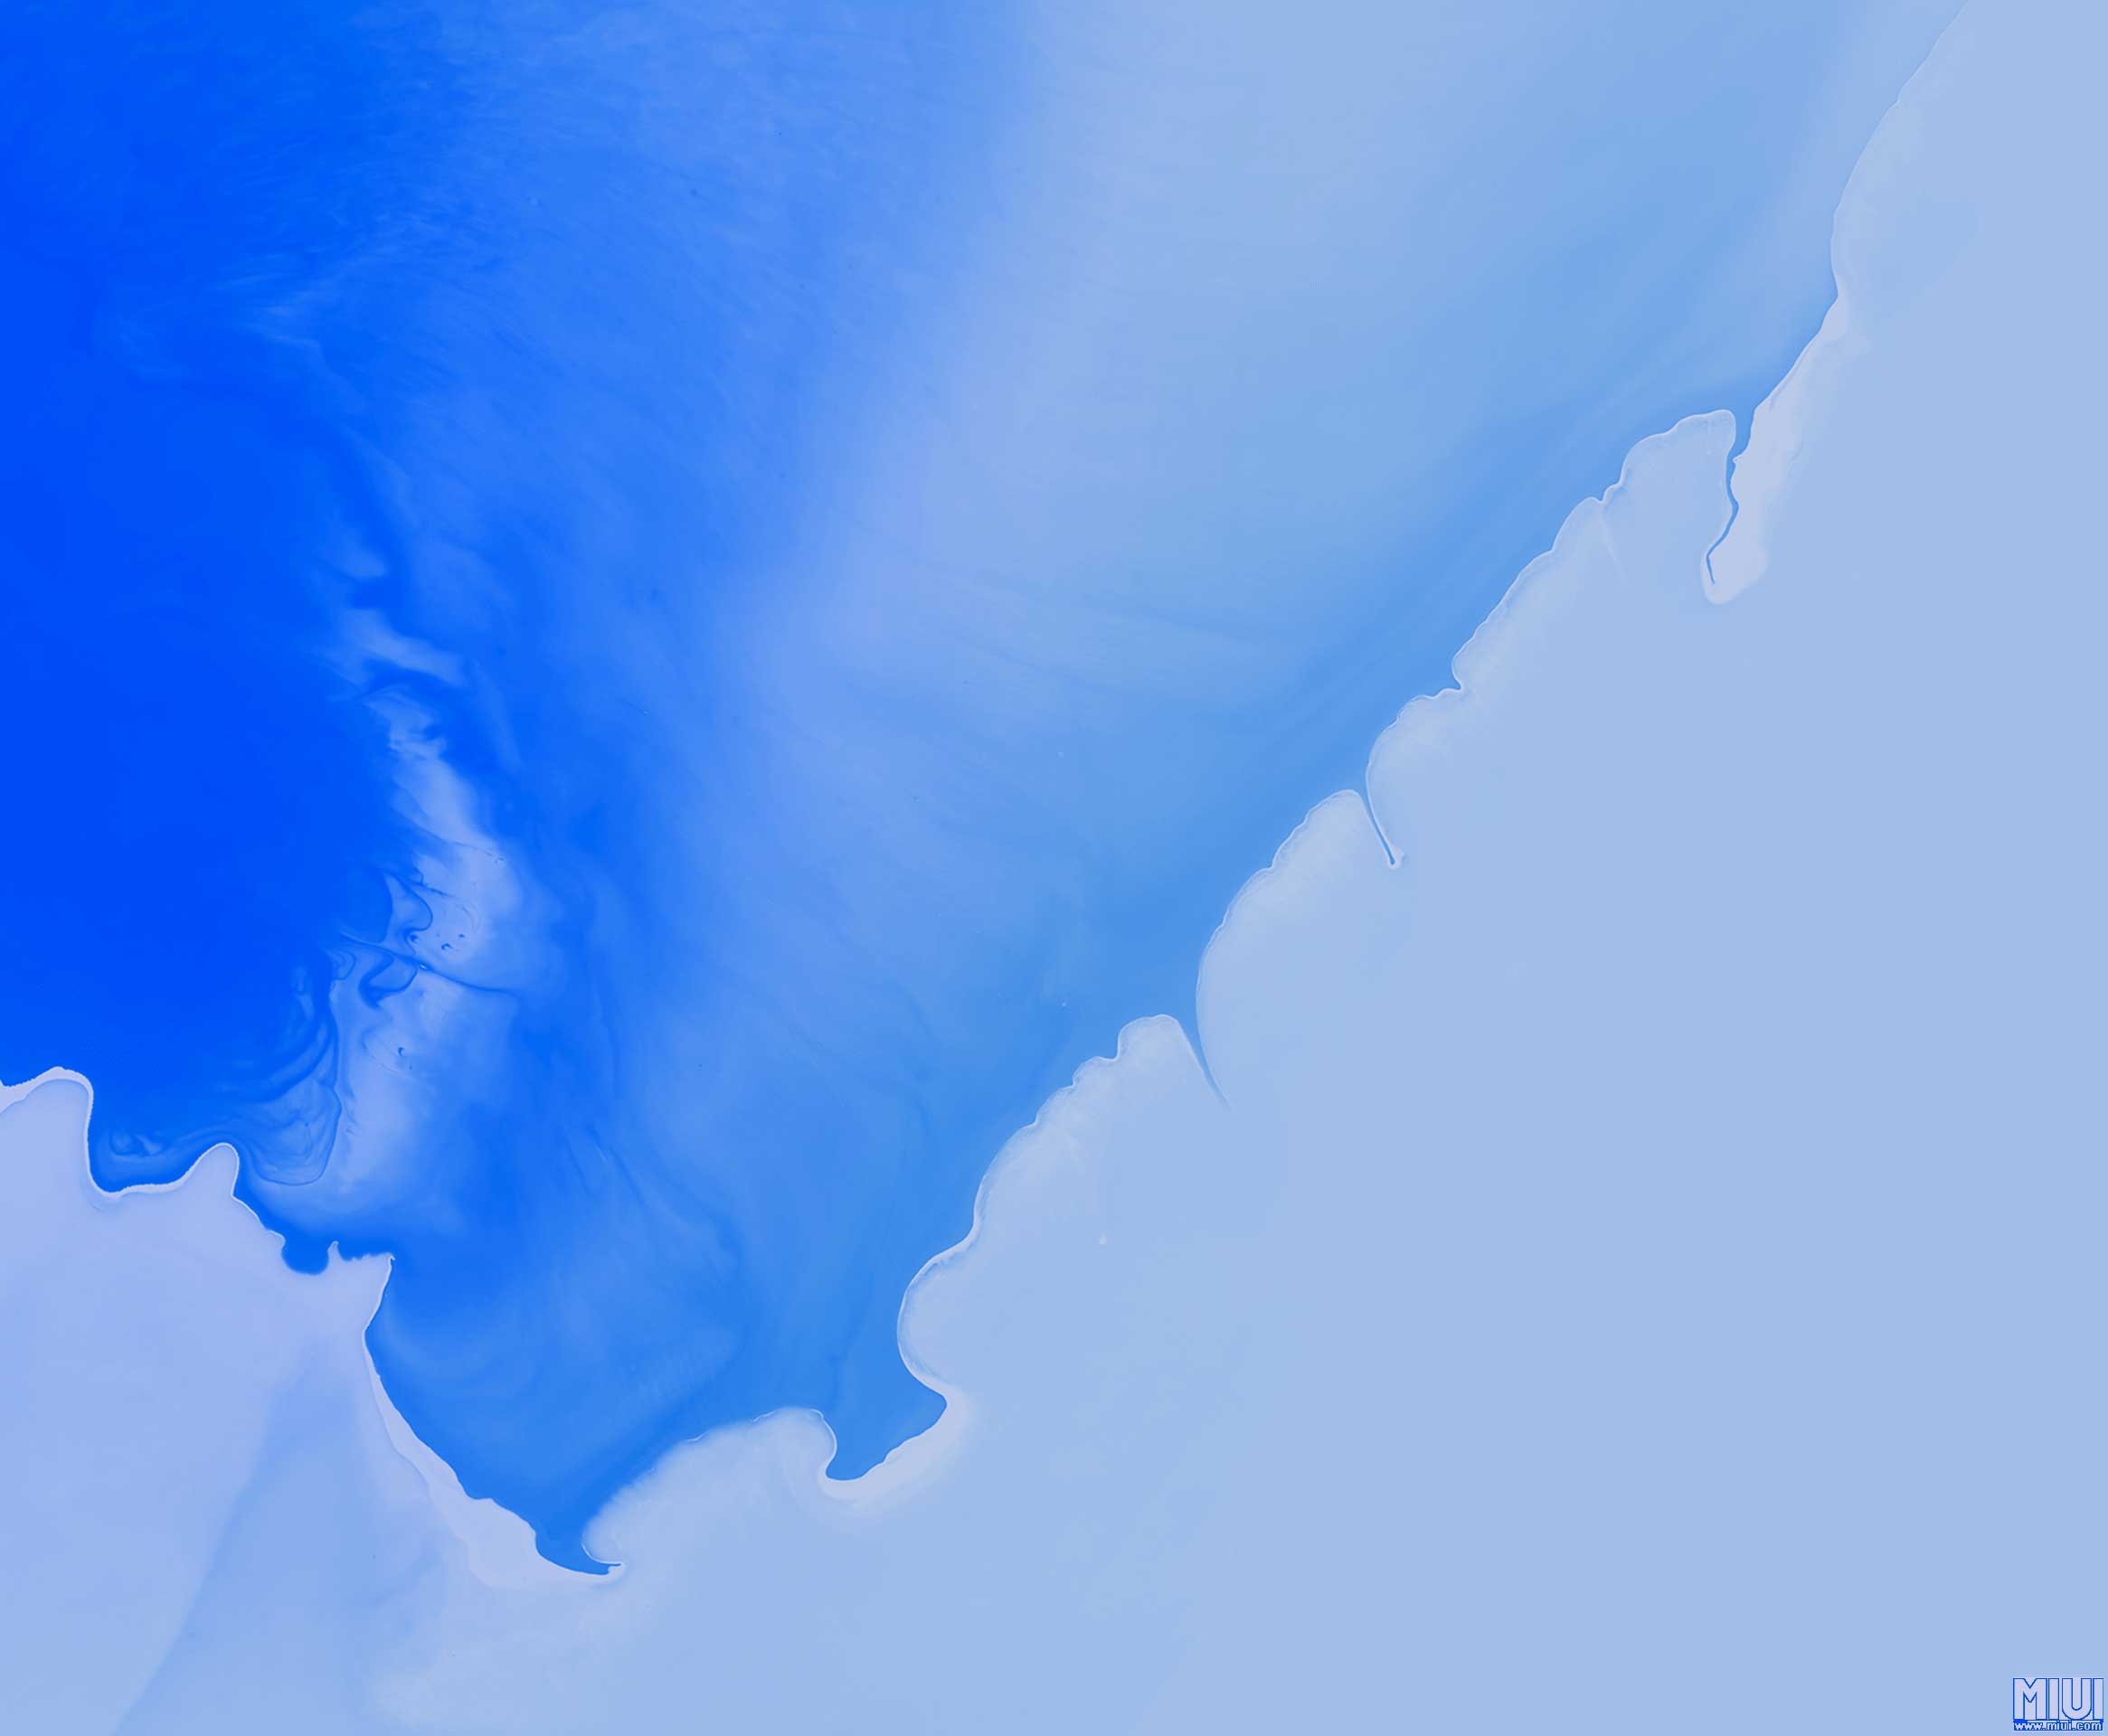 google pixel wallpaper ufficiale,blu,cielo,nube,acqua,atmosfera